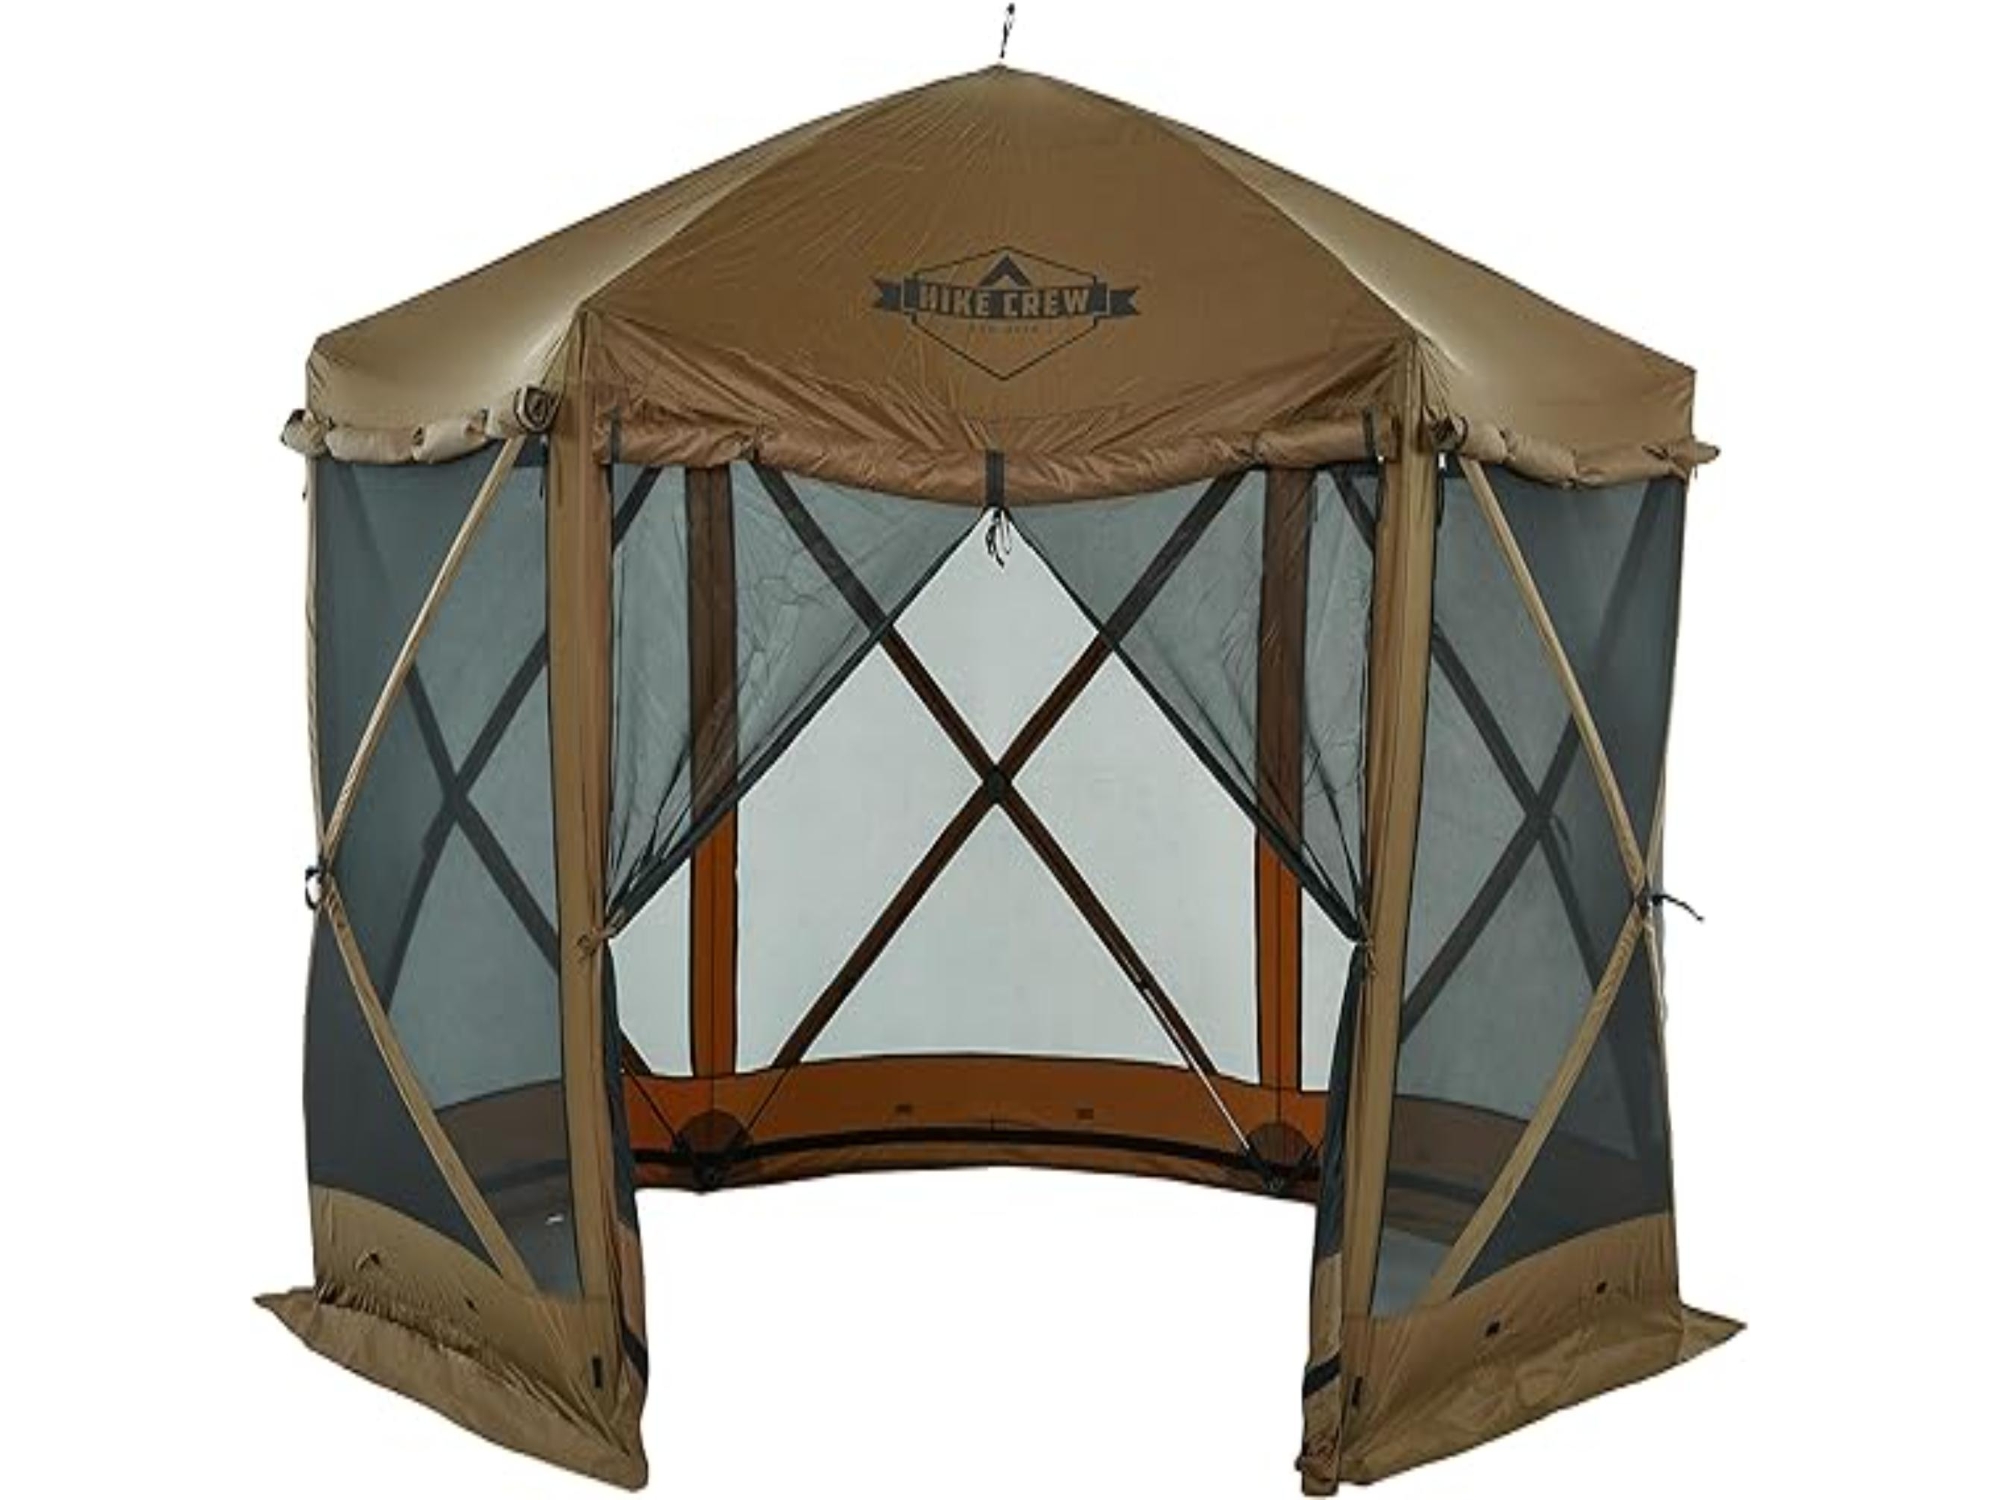 Hike Crew 12x12 Pop Up Gazebo, Outdoor Tent Canopy w/Wind Panels, Brown